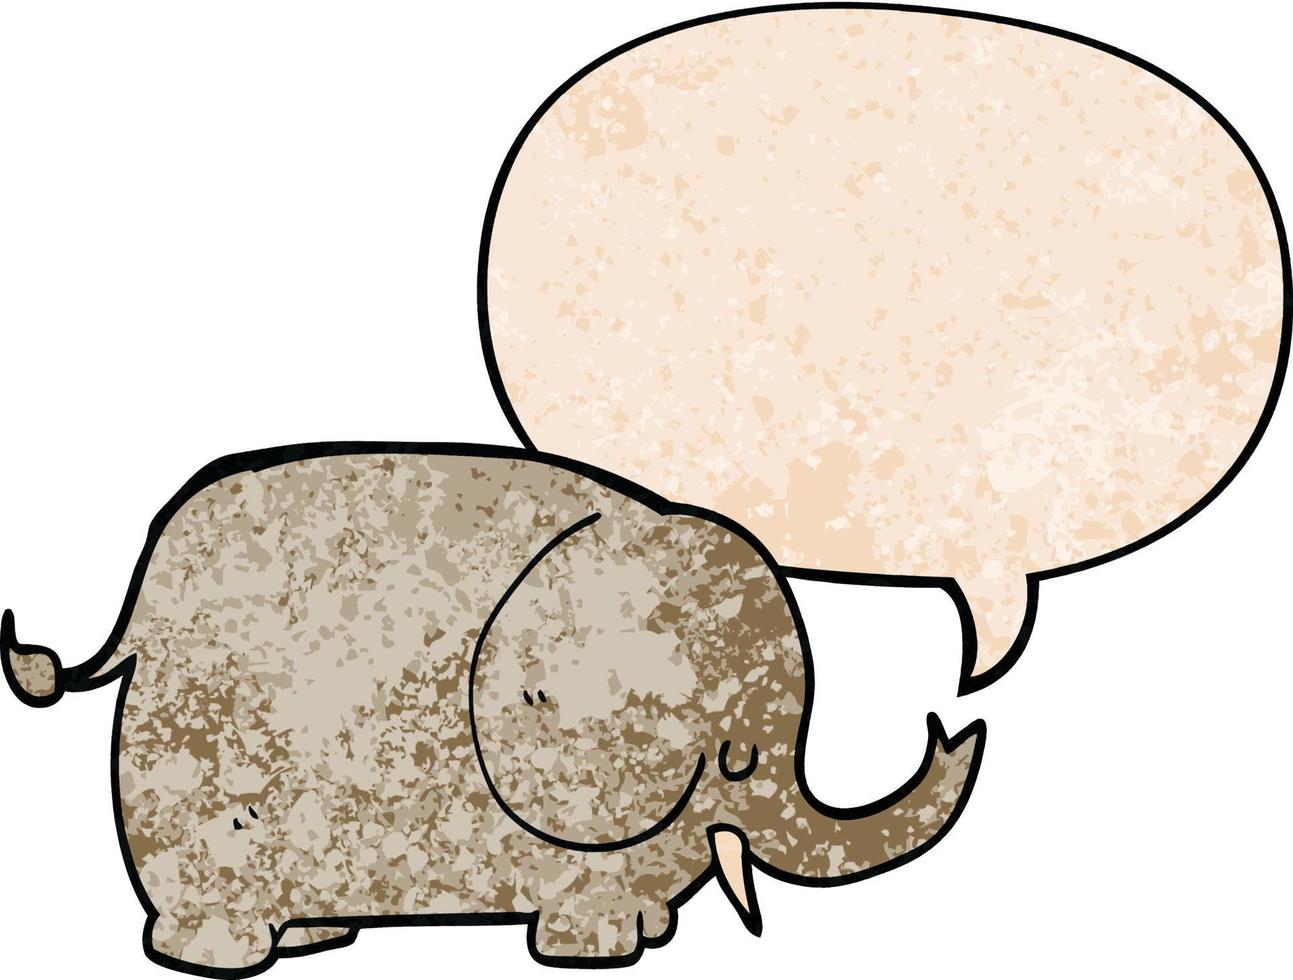 cartoon olifant en tekstballon in retro textuurstijl vector